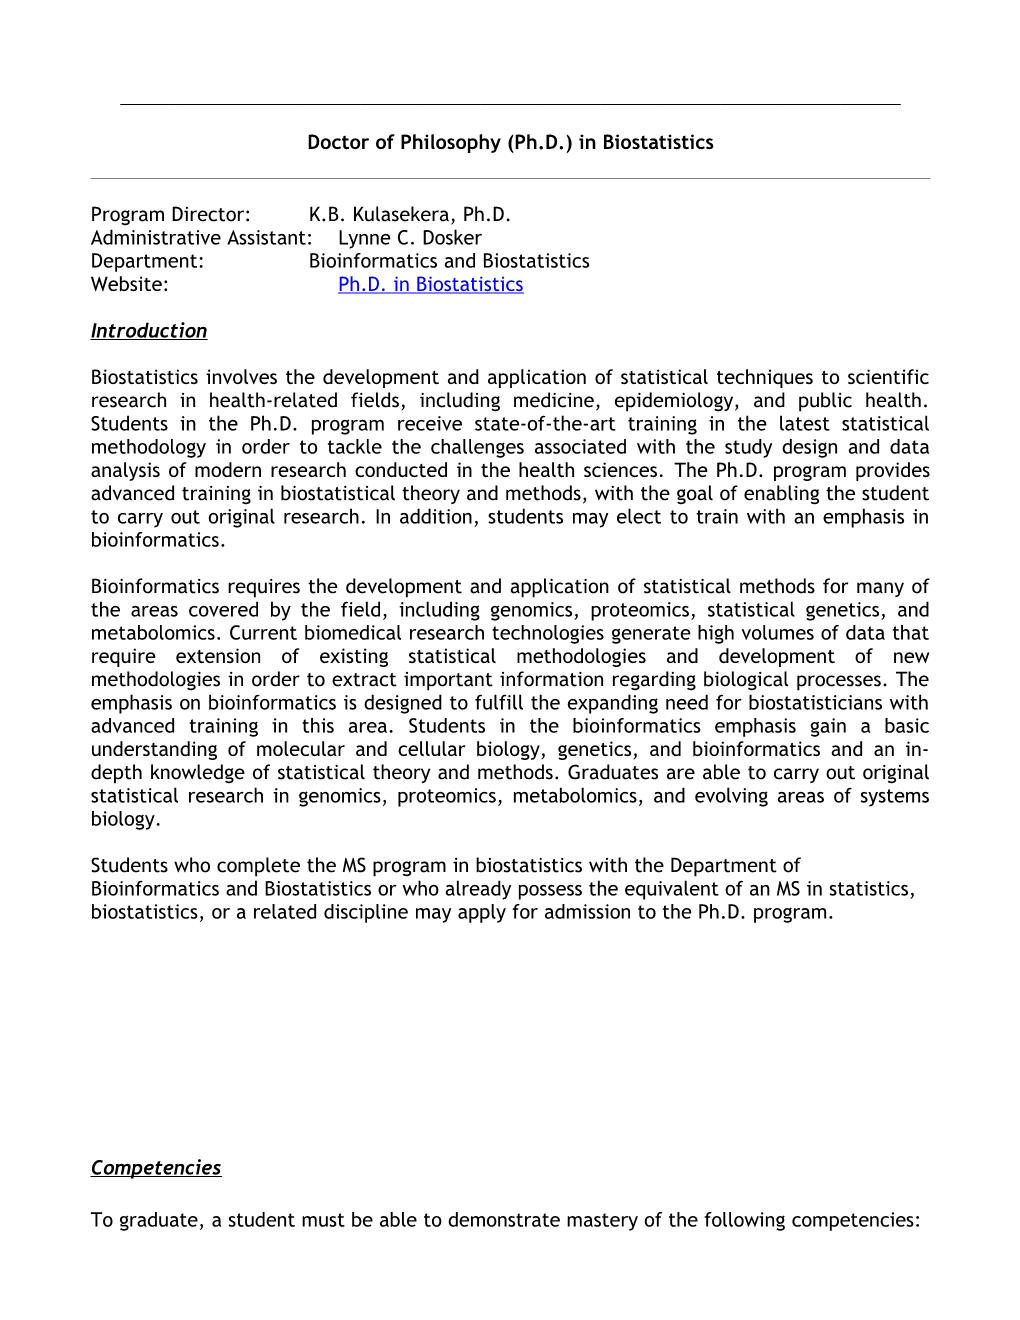 Doctor of Philosophy in Biostatistics V2015.08.28-03